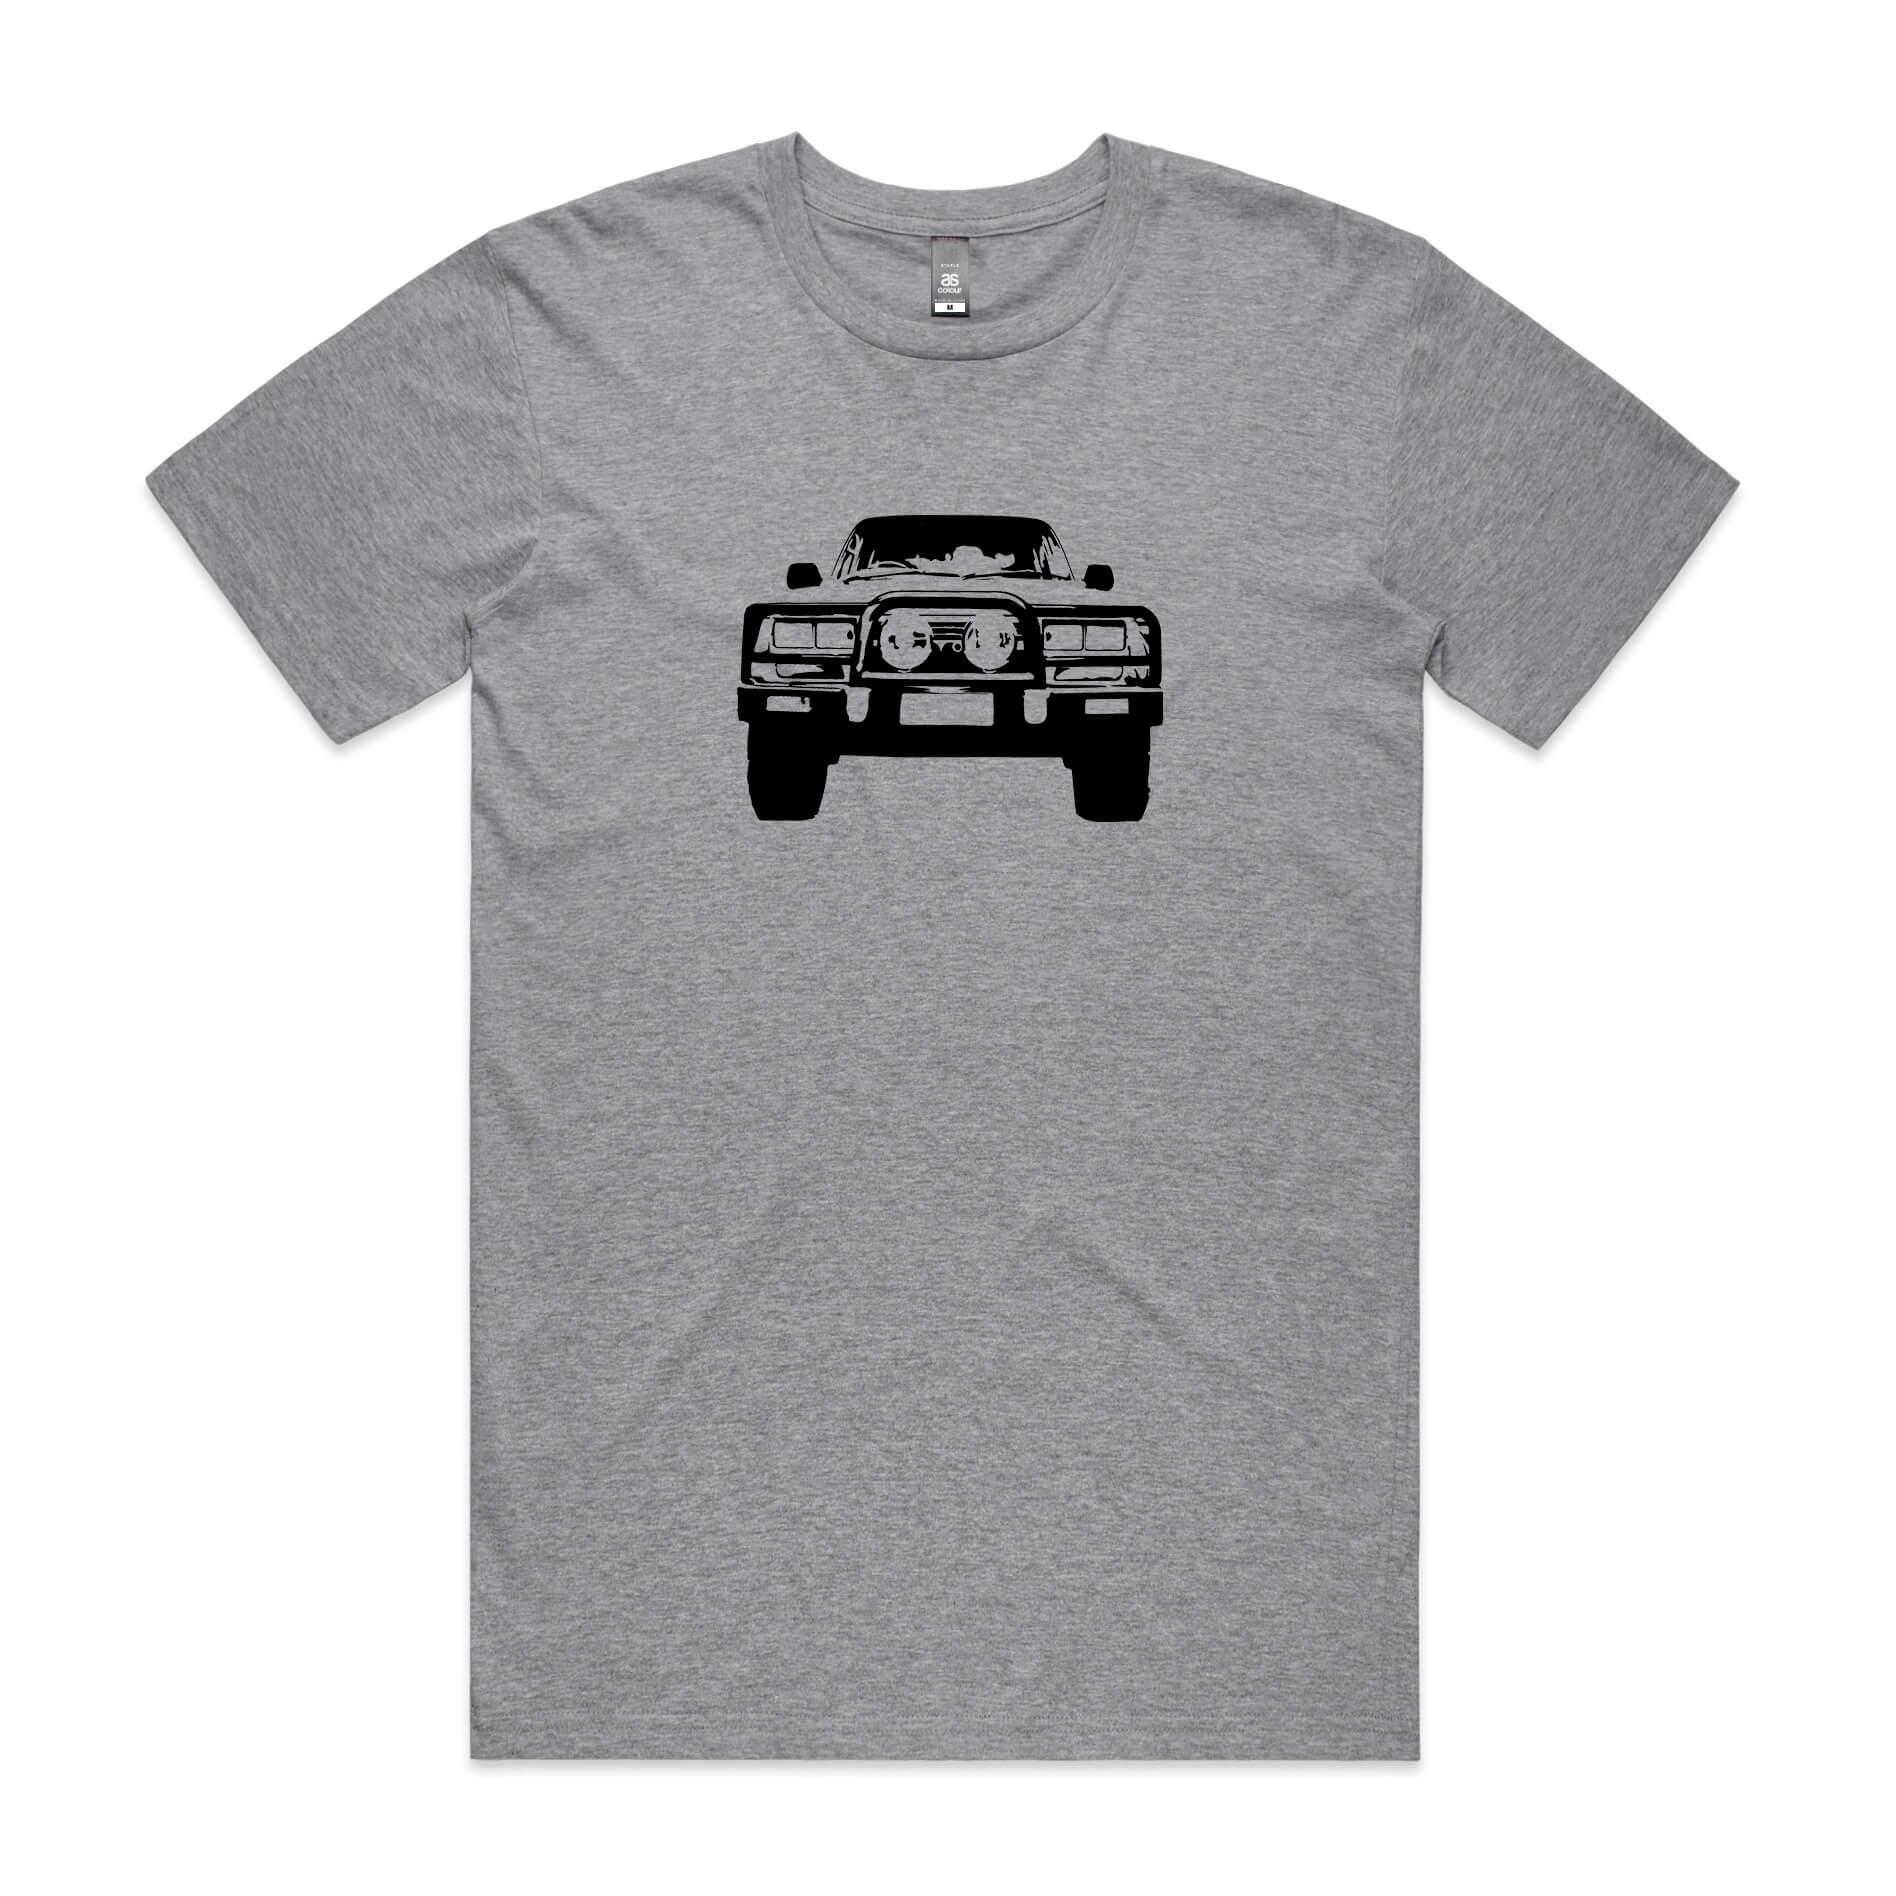 Toyota LandCruiser 80 Series t-shirt in grey